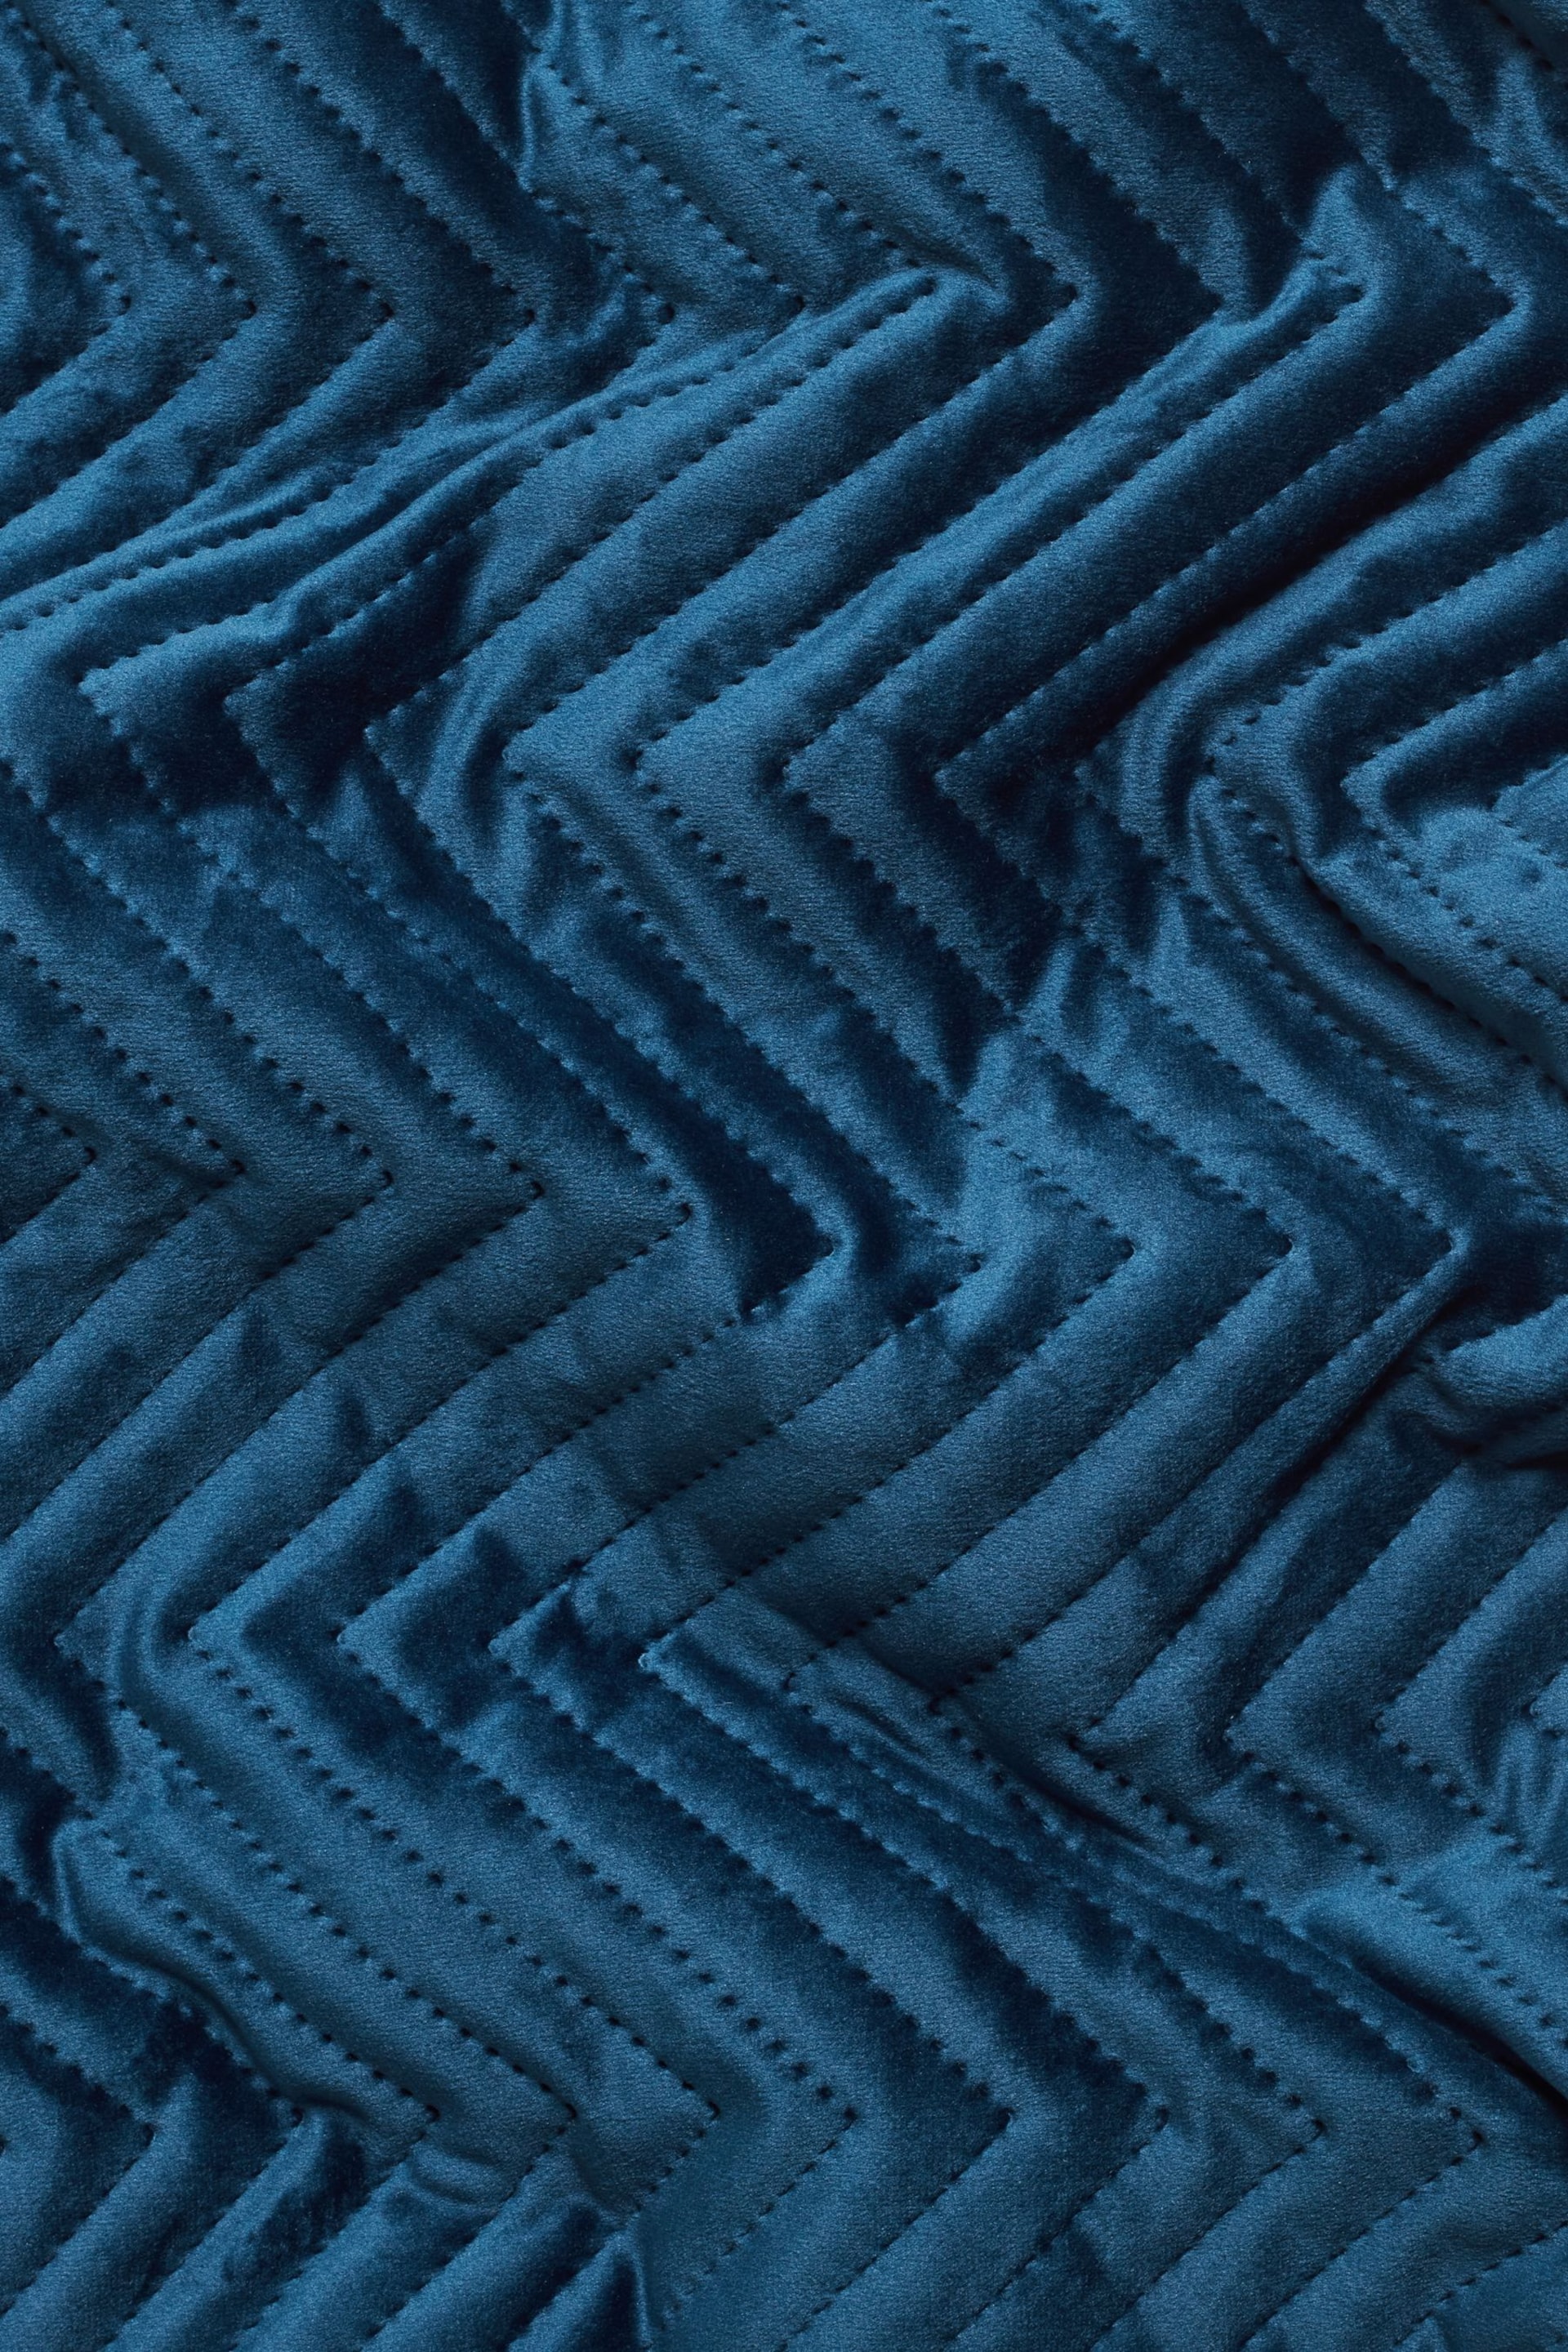 Navy Blue Madison Quilted Velvet Duvet Cover and Pillowcase Set - Image 4 of 4